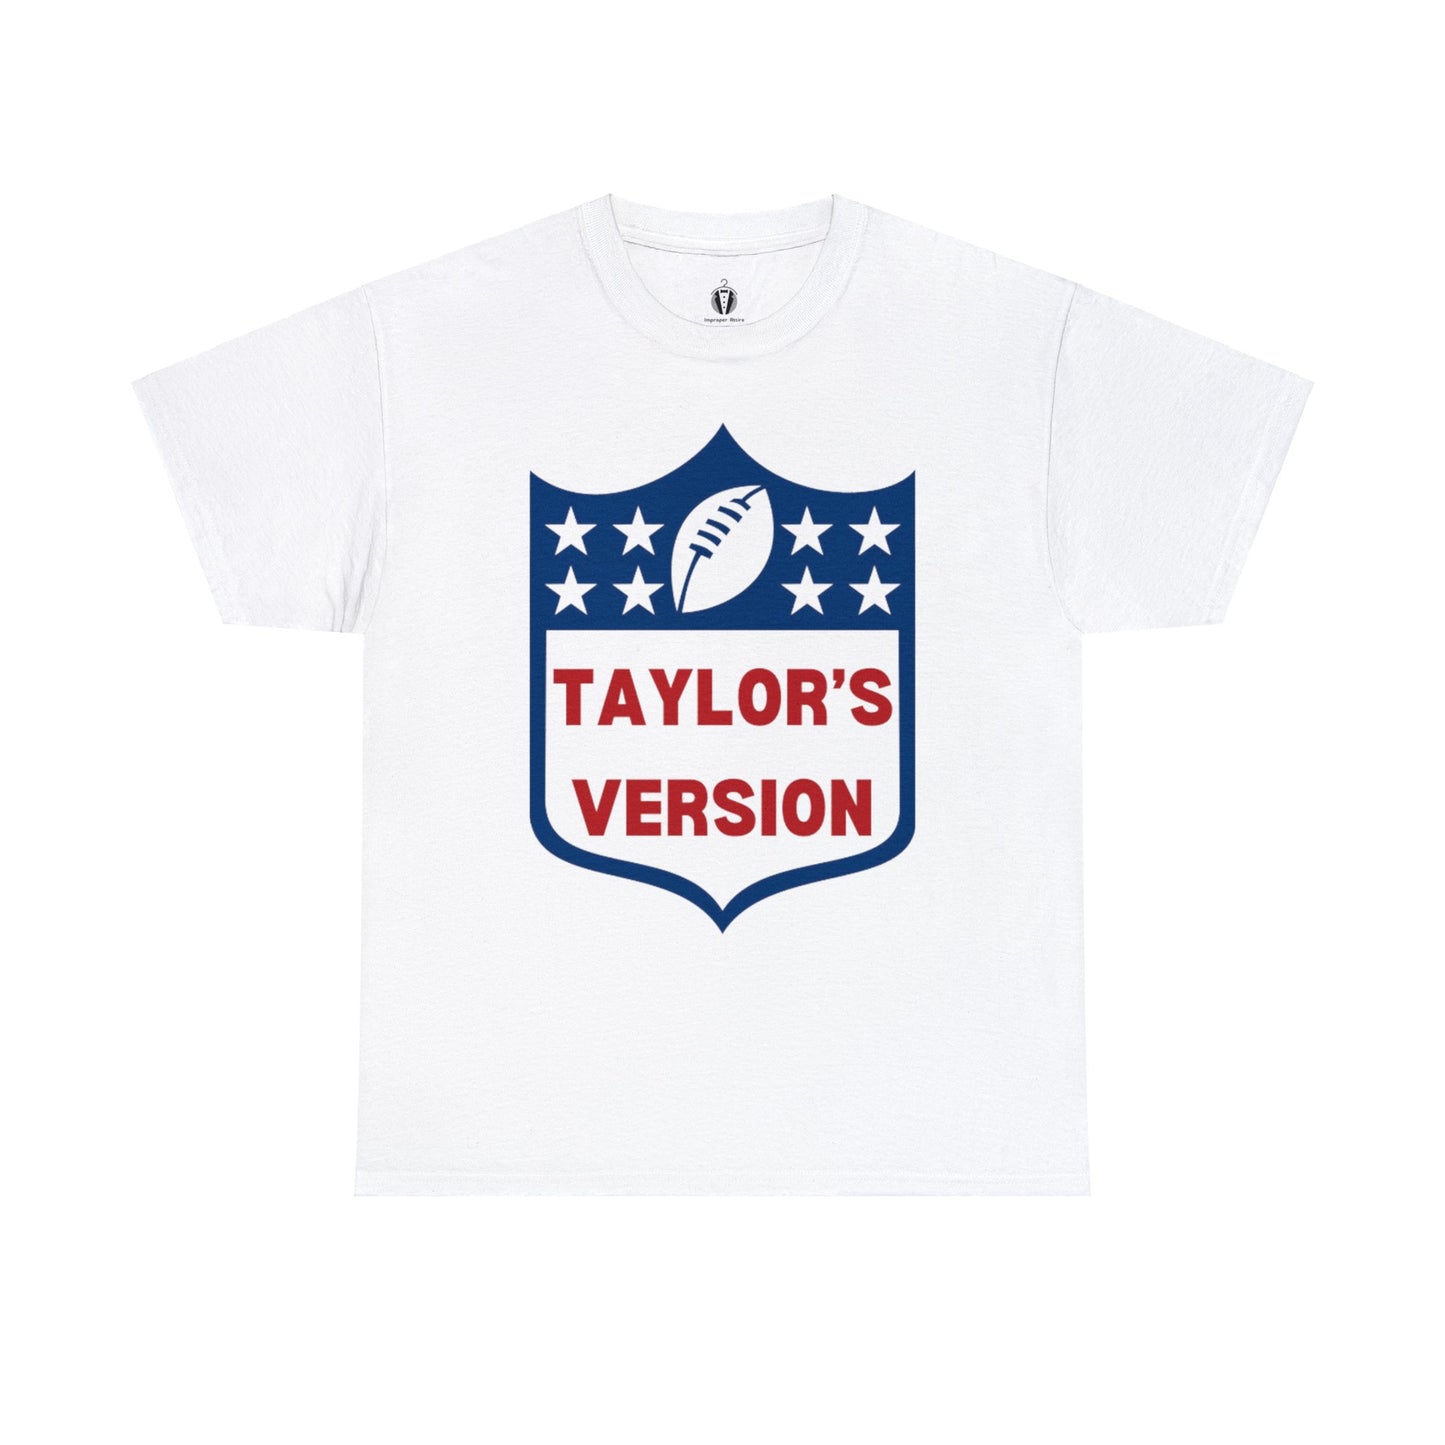 "Taylors Version" - Tee